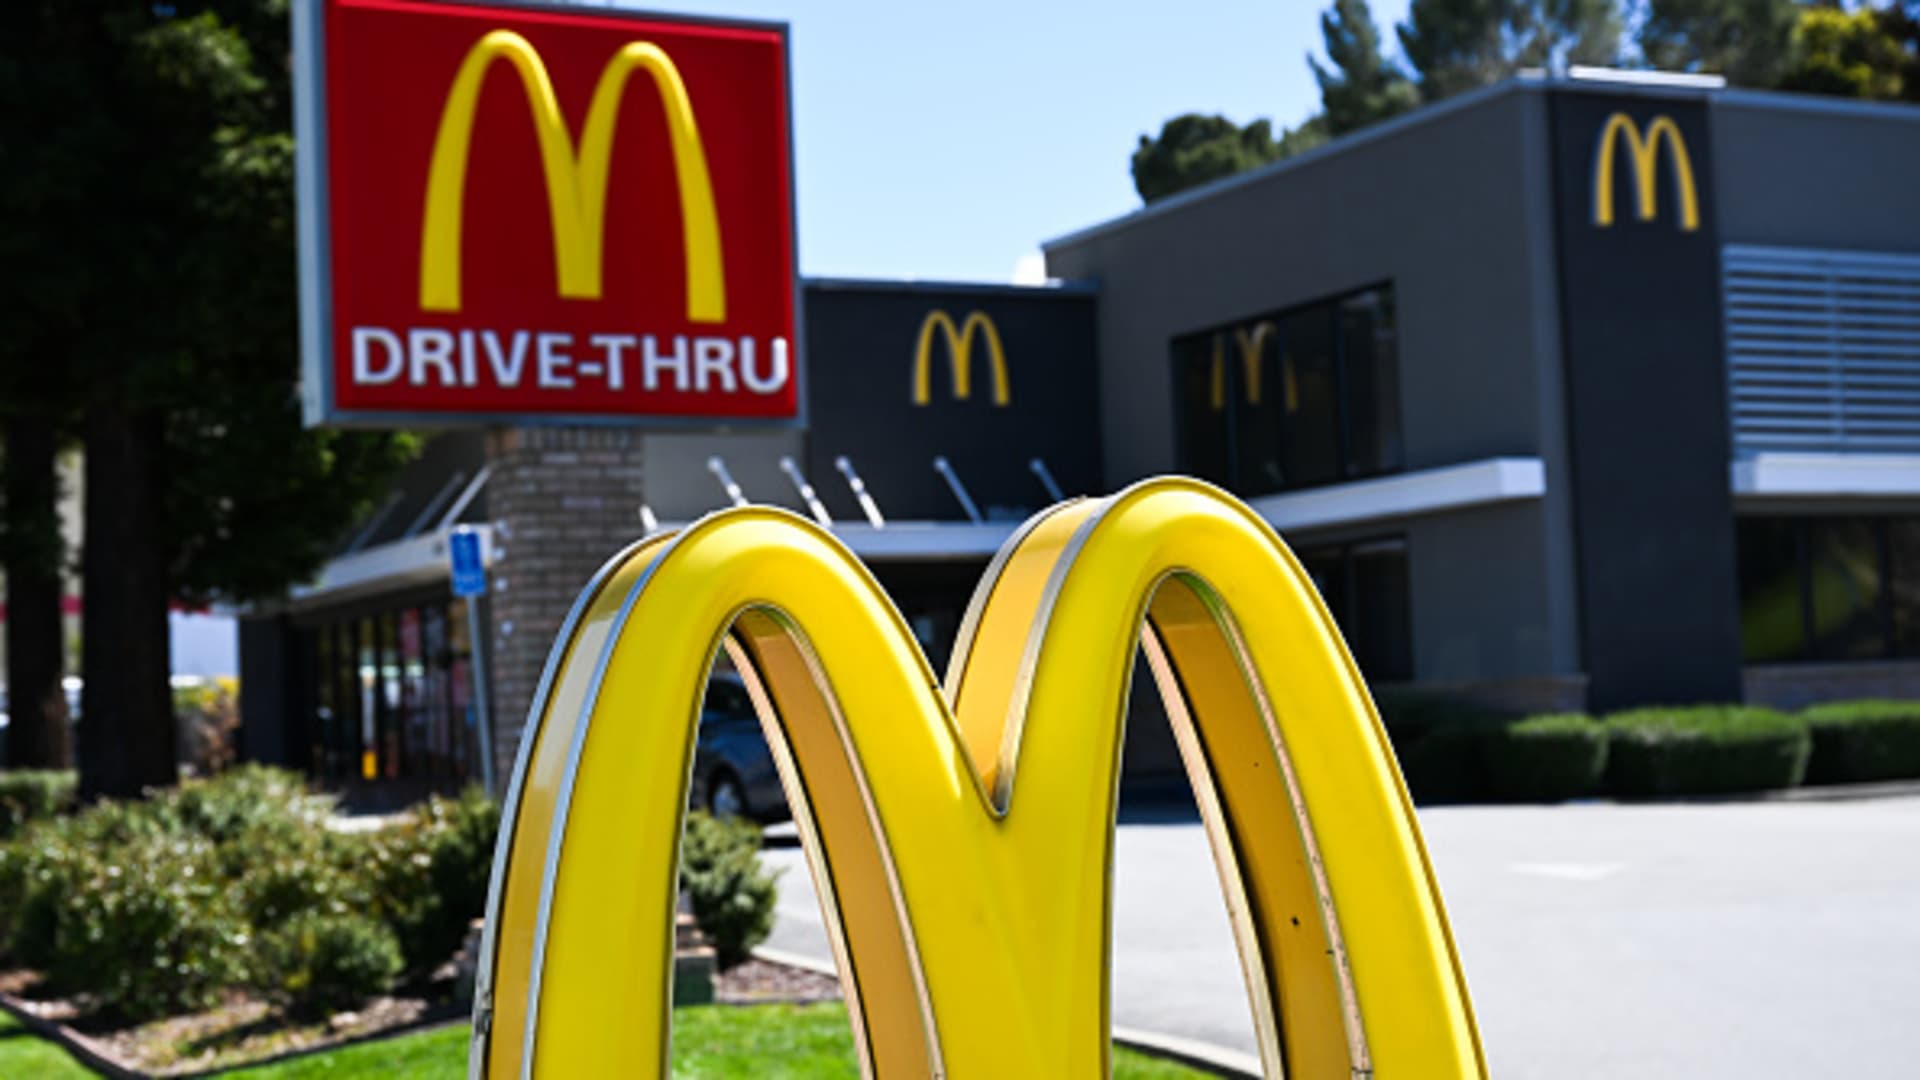 McDonald’s revenue climbs 14% as price hikes boost U.S. sales